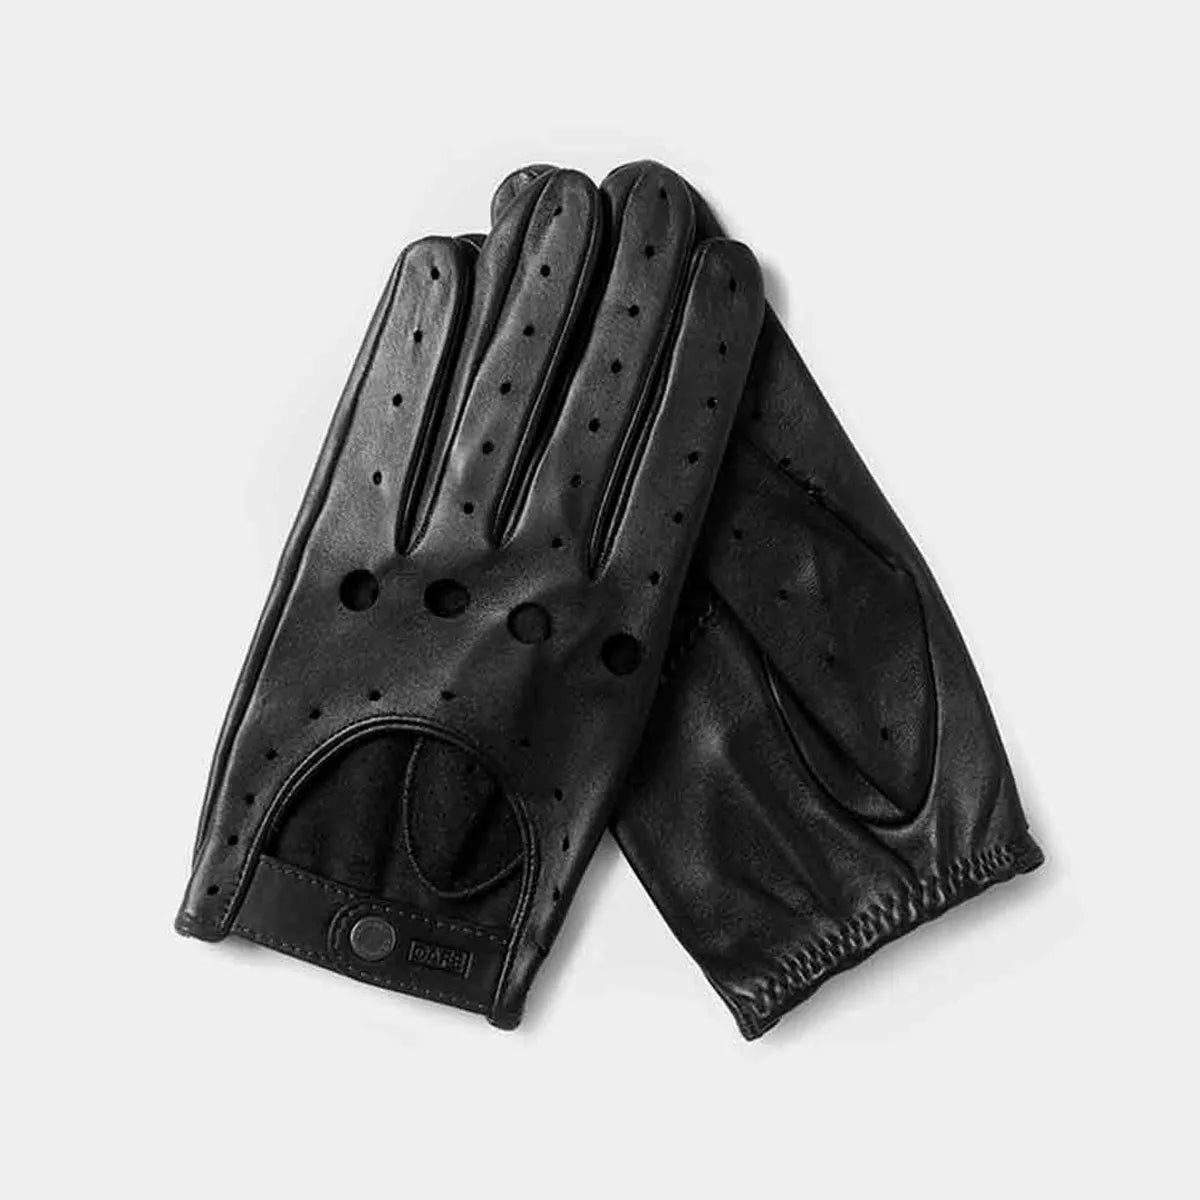 Triton driving gloves in black